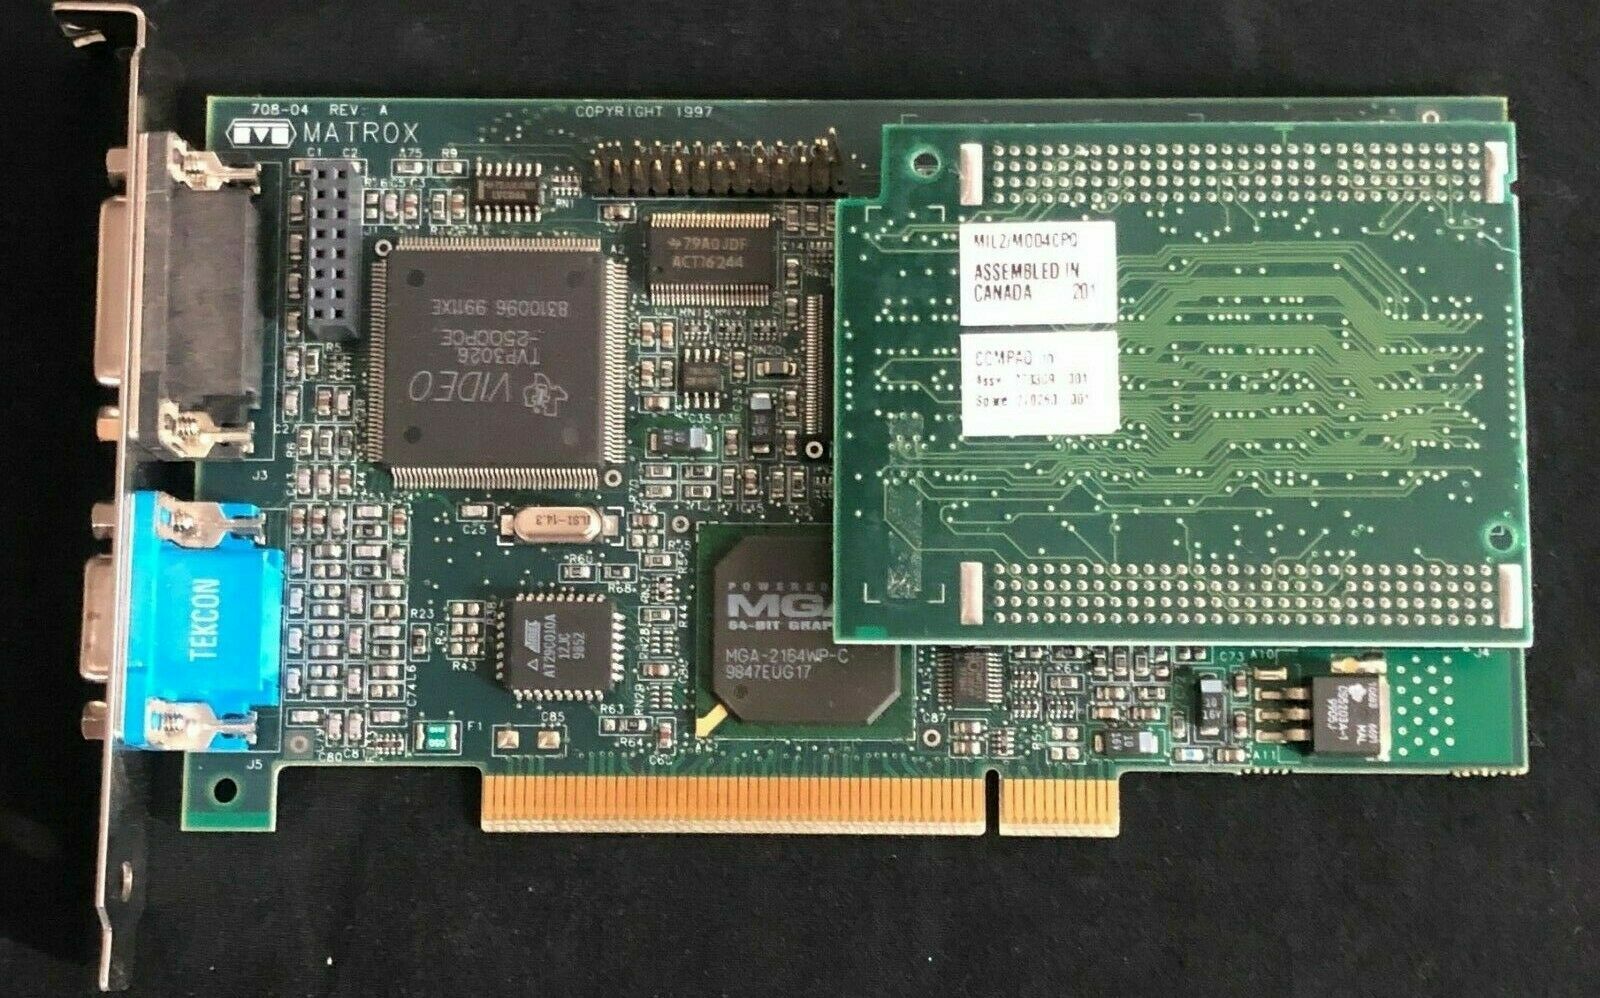  Matrox 708-04 Rev A MGI MIL2P/4/HPC 5064-3389 DVI VGA PCI Card